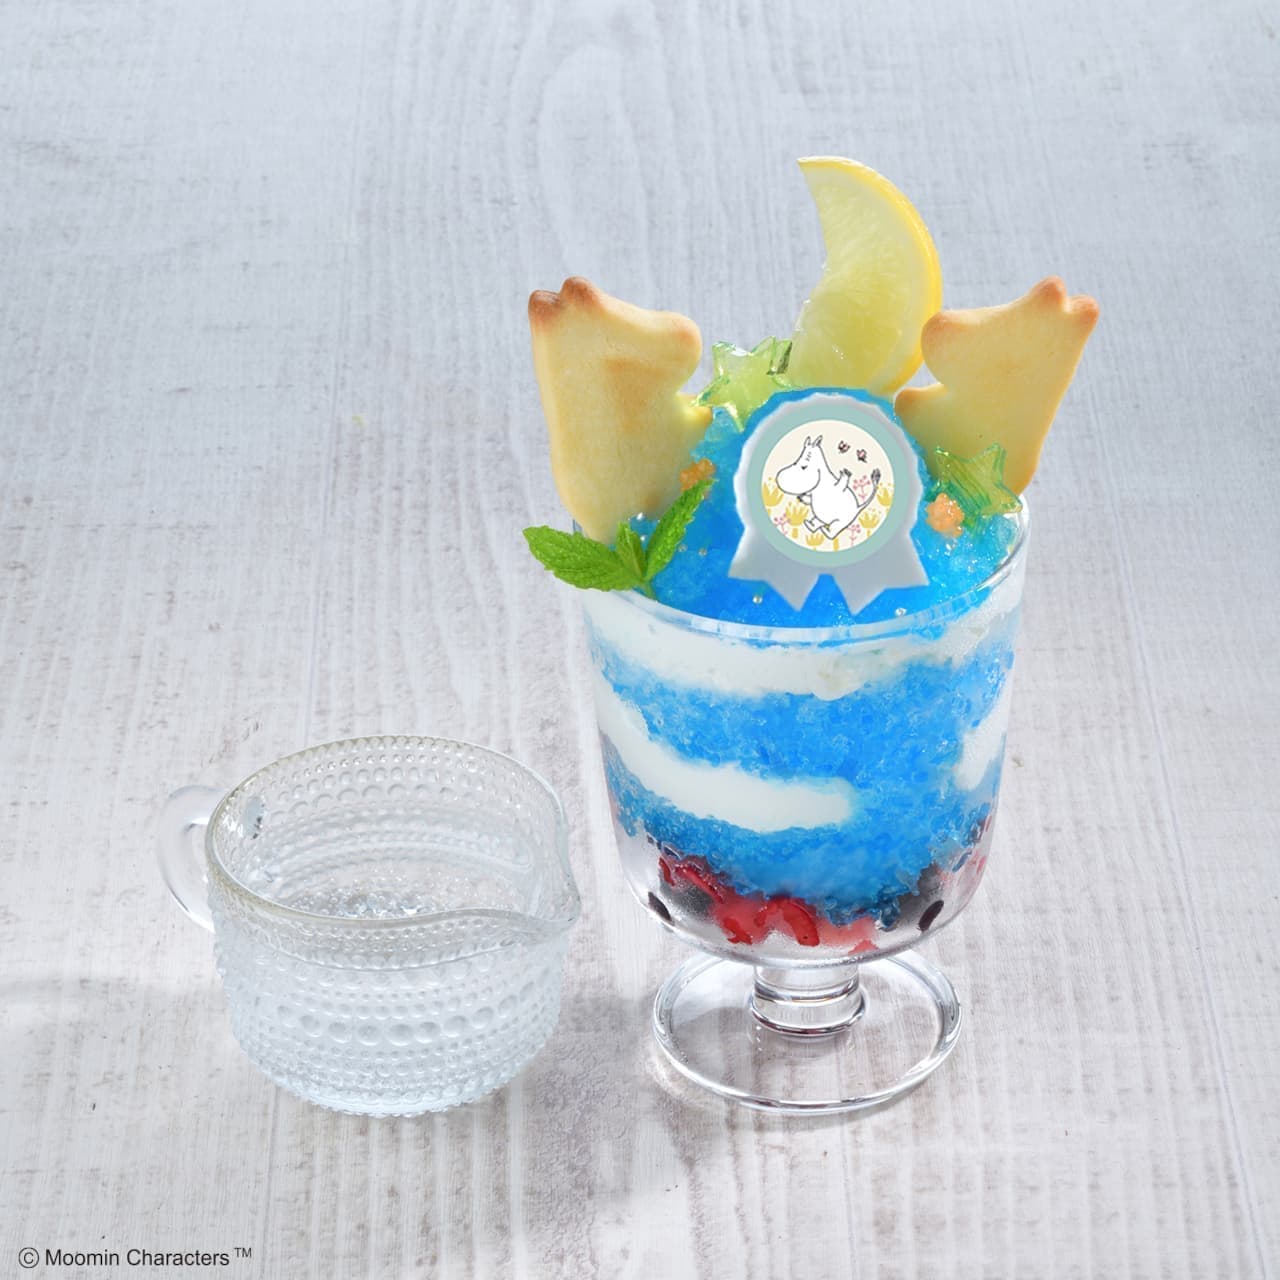 Moomin Cafe “Moomin Day” Commemorative Menu & Goods